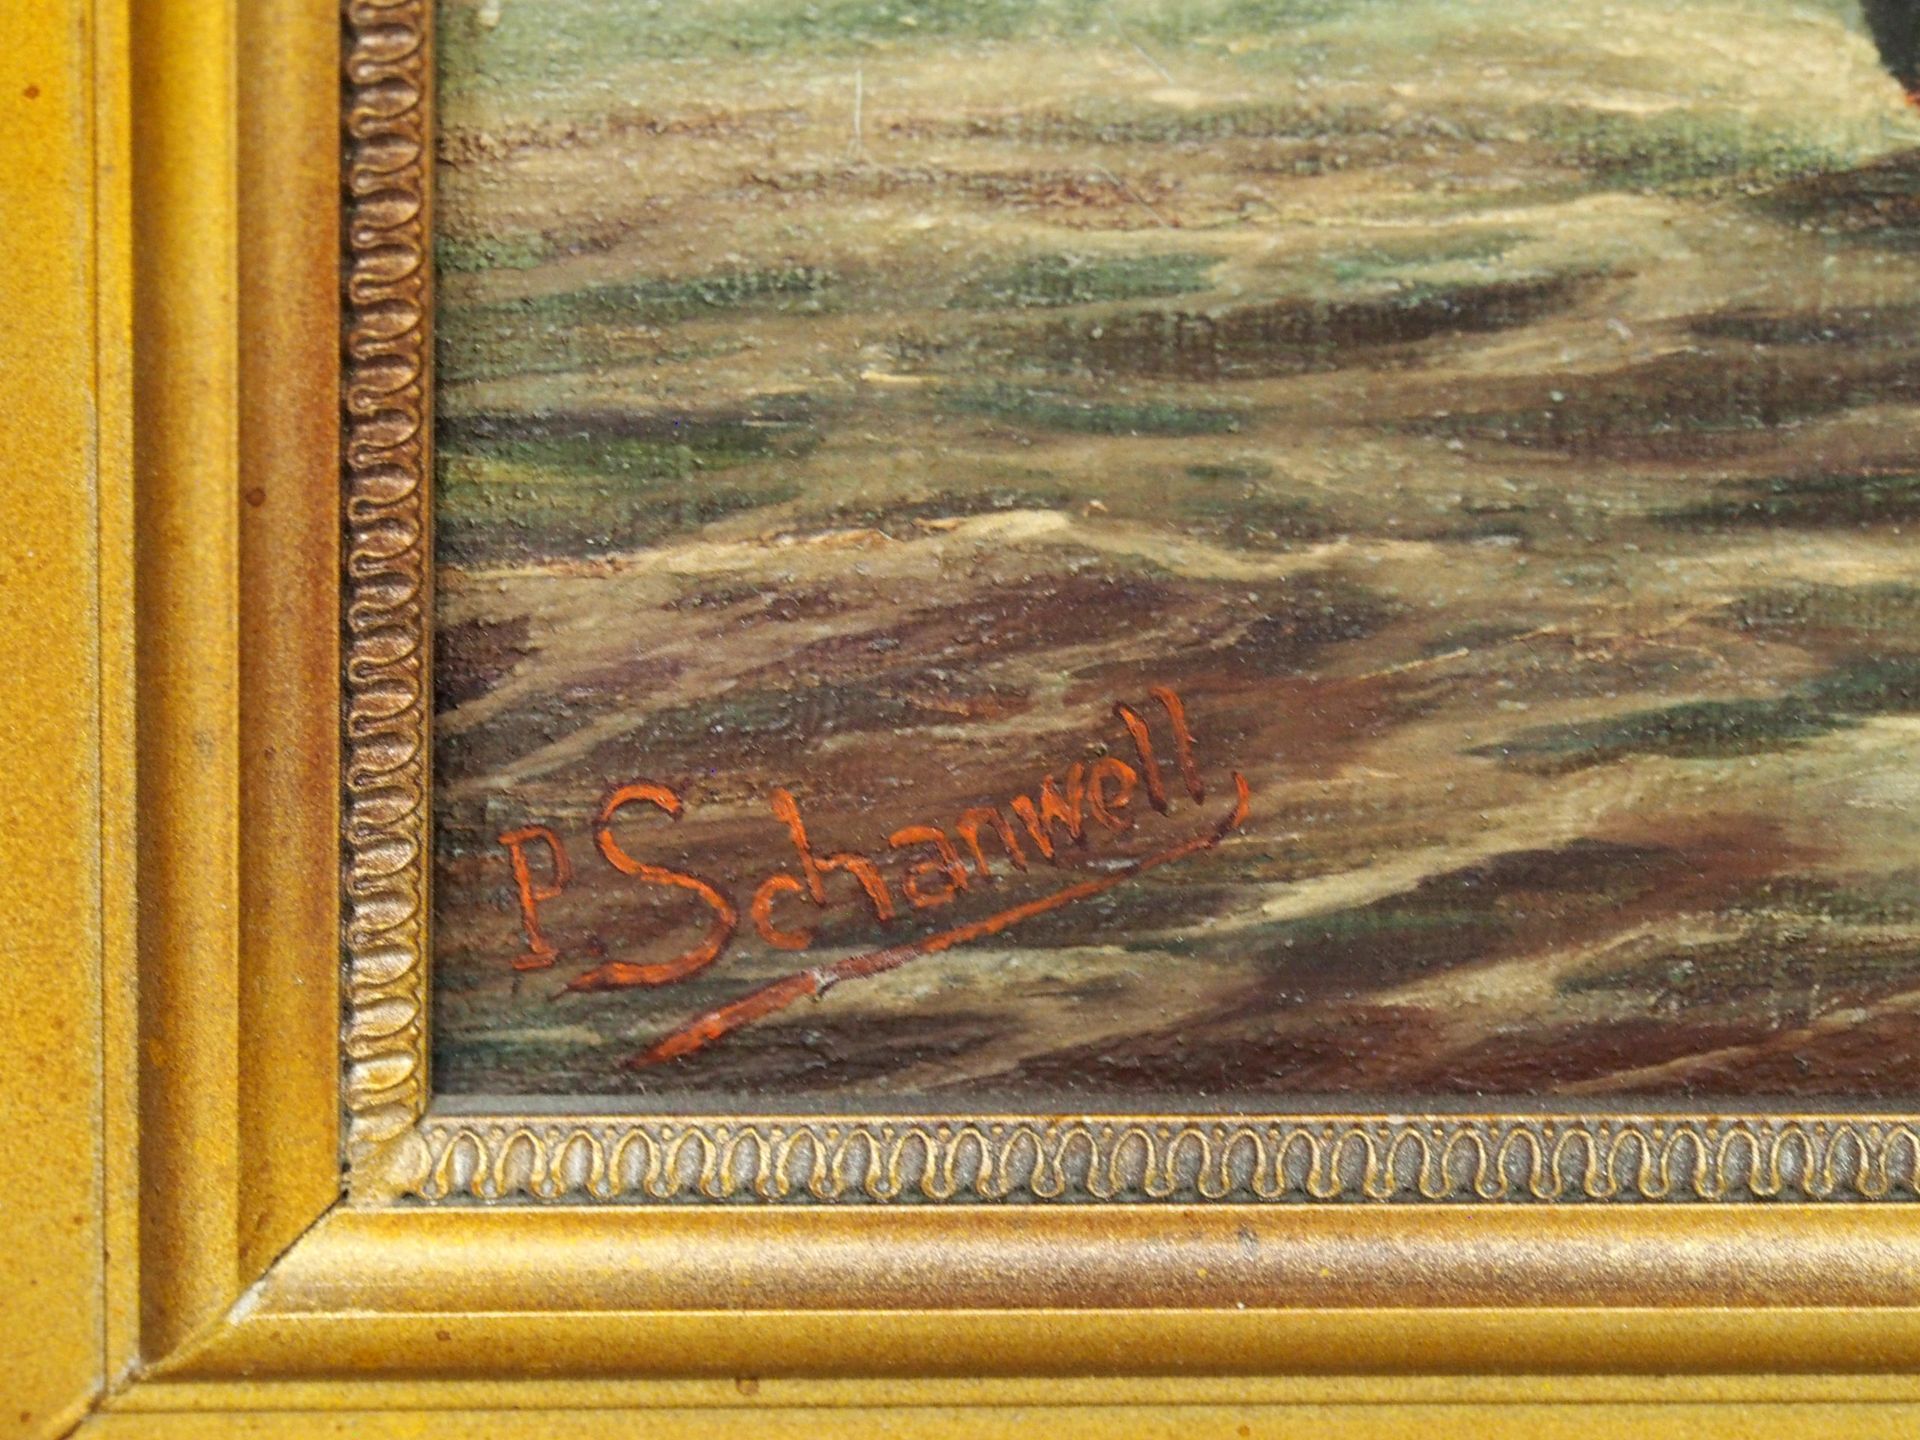 SCHANWELL, P.: Dampfer auf hoher See - Image 2 of 3